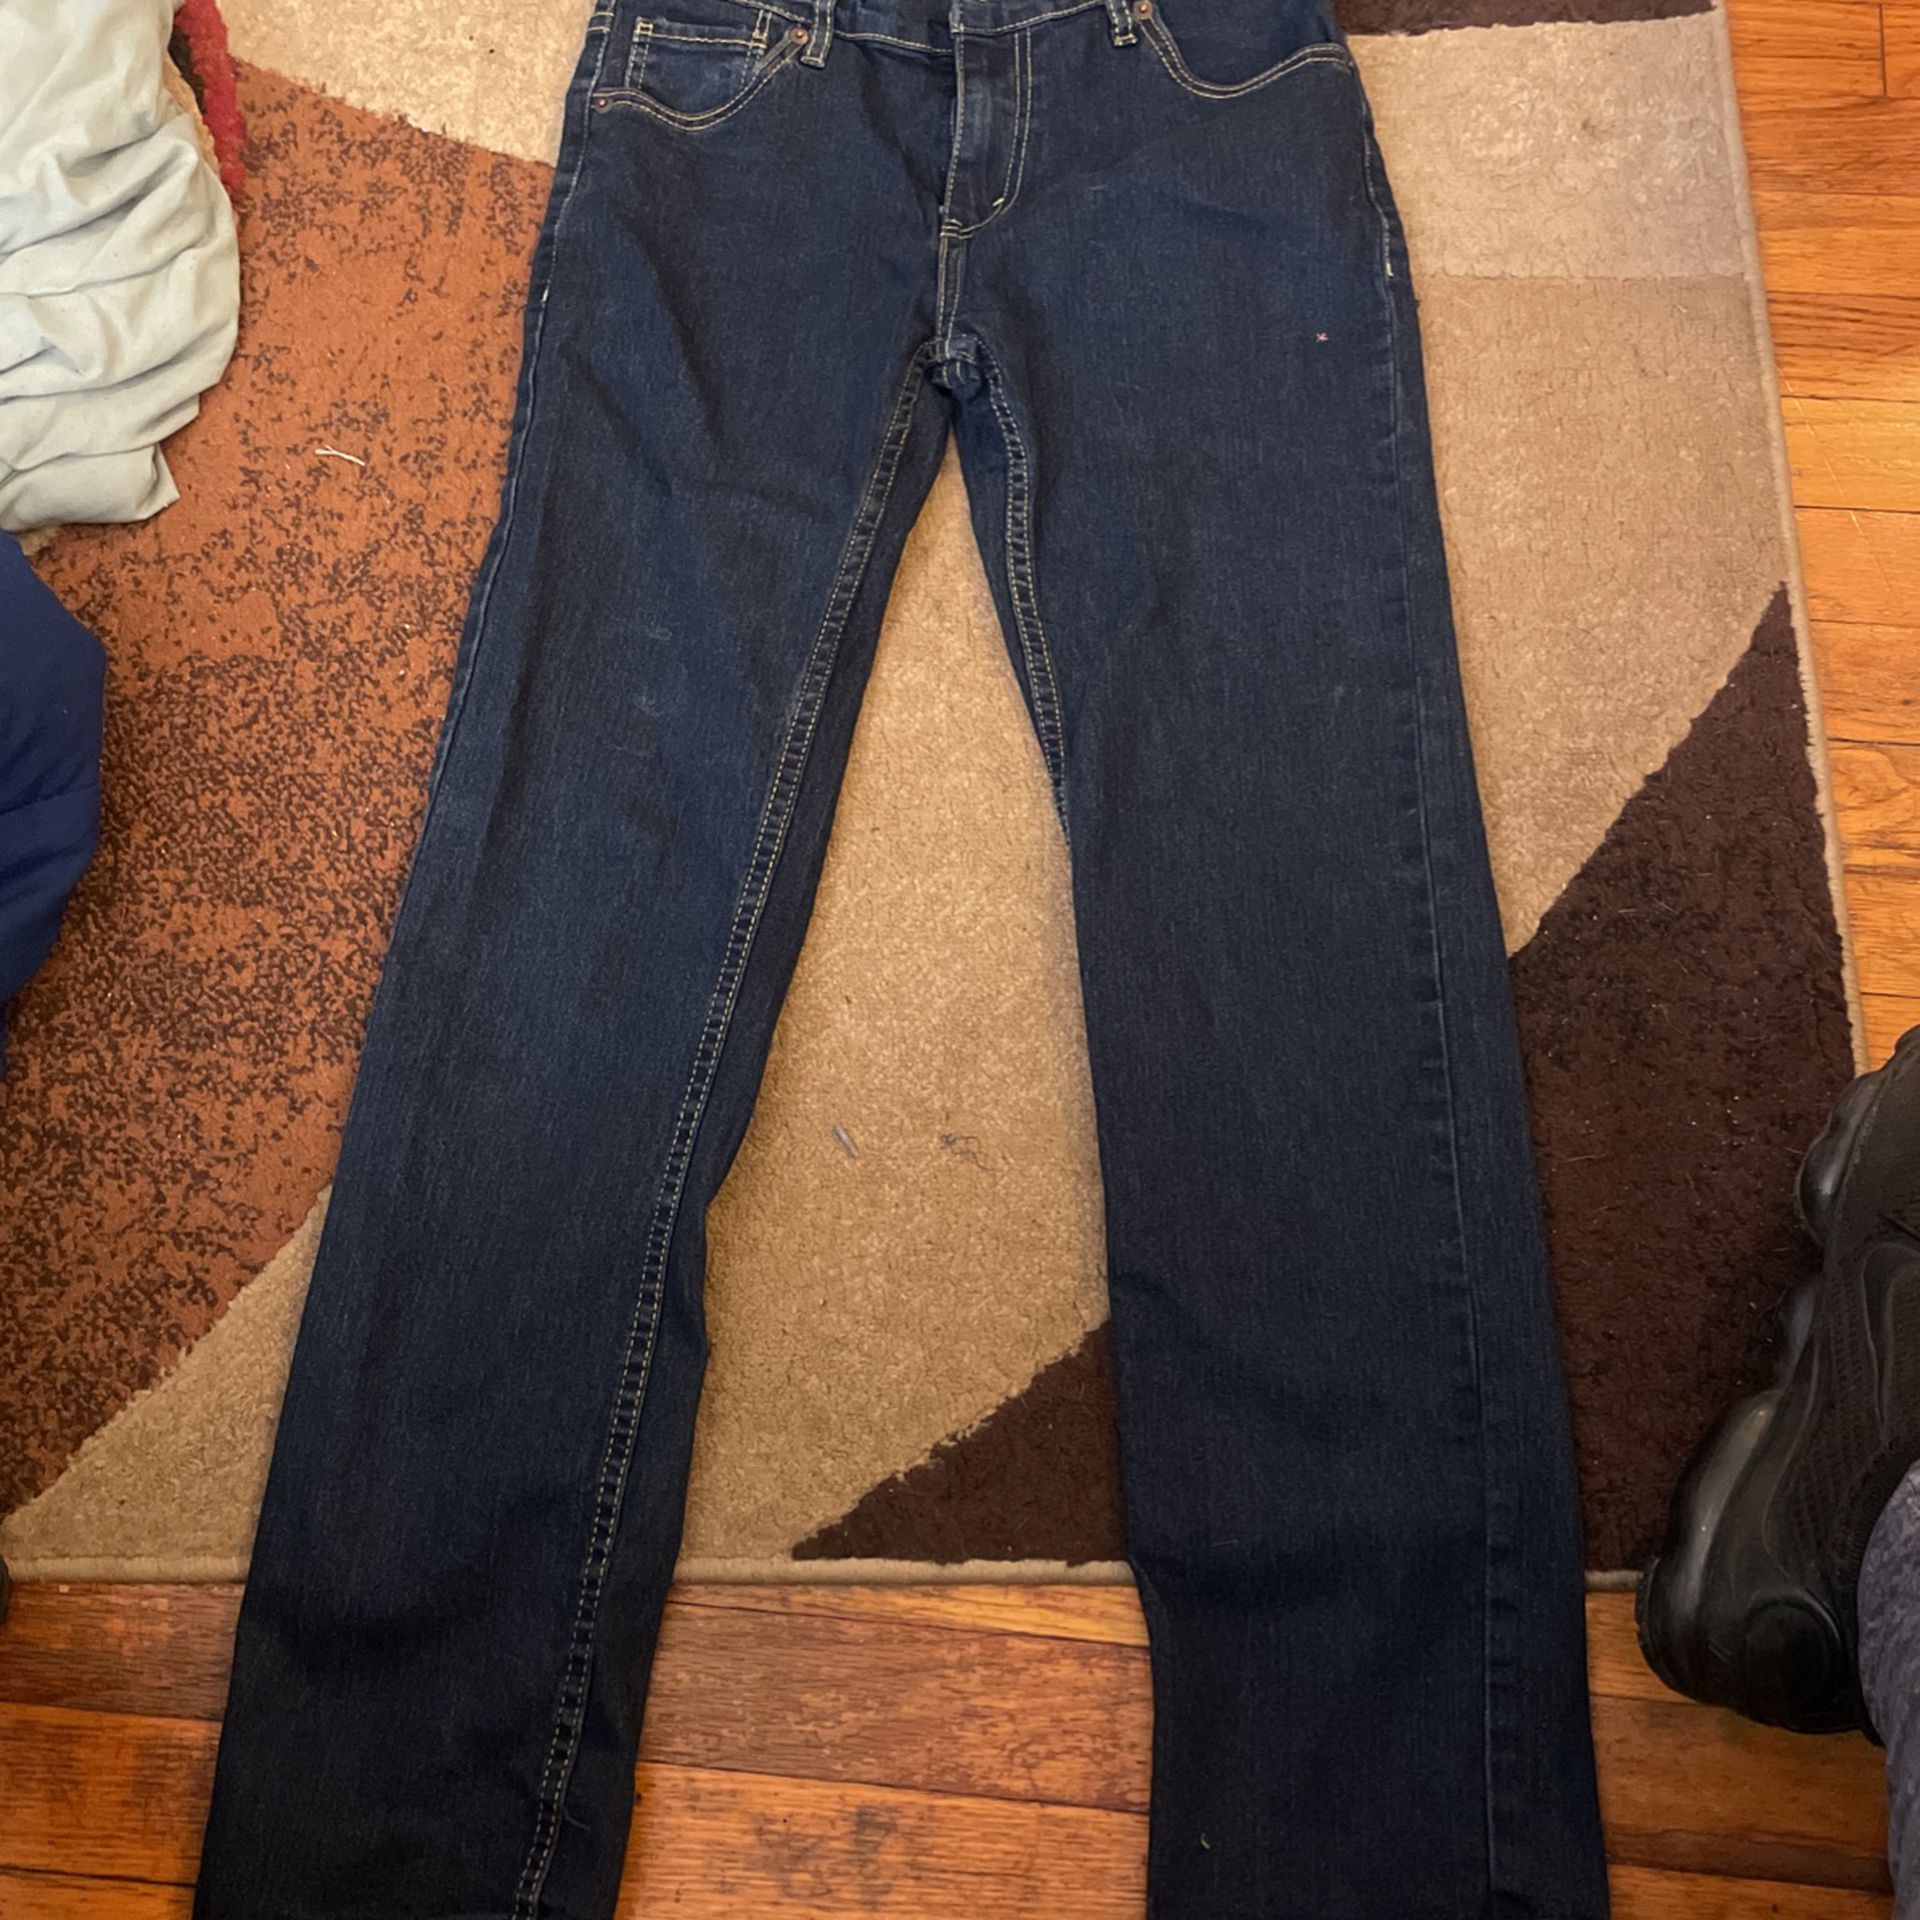 Levi's 511 Jeans Size 16 Boys $18